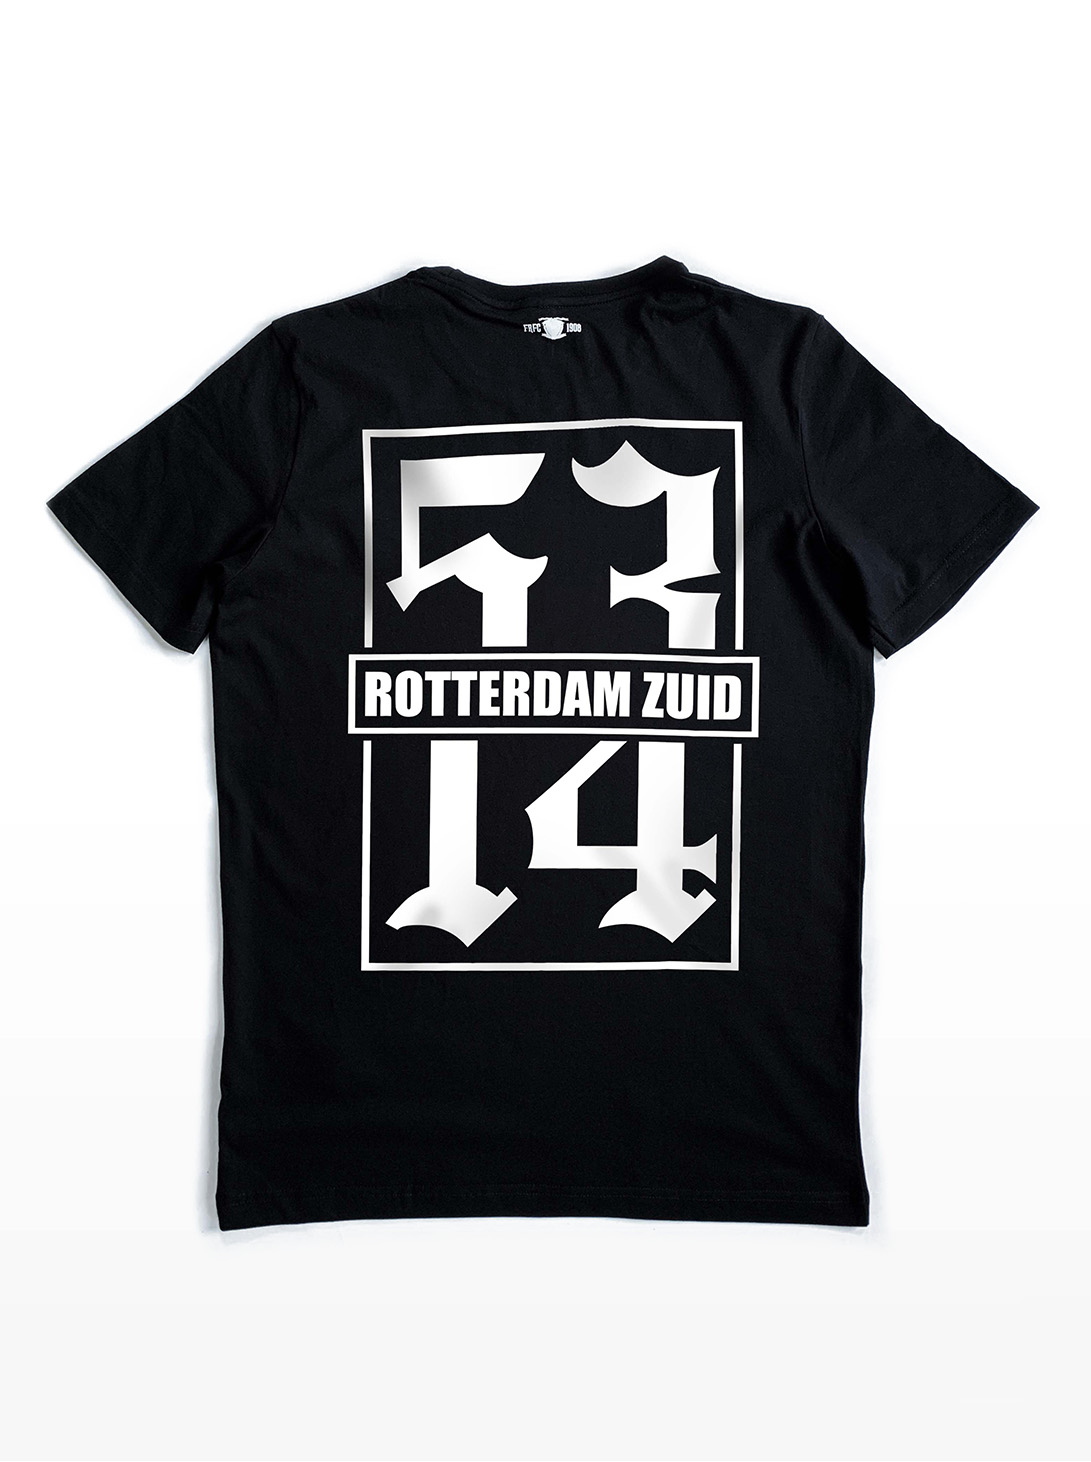 FRFC1908 Tshirt, Black 5314 - Rotterdam Zuid - Achterkant